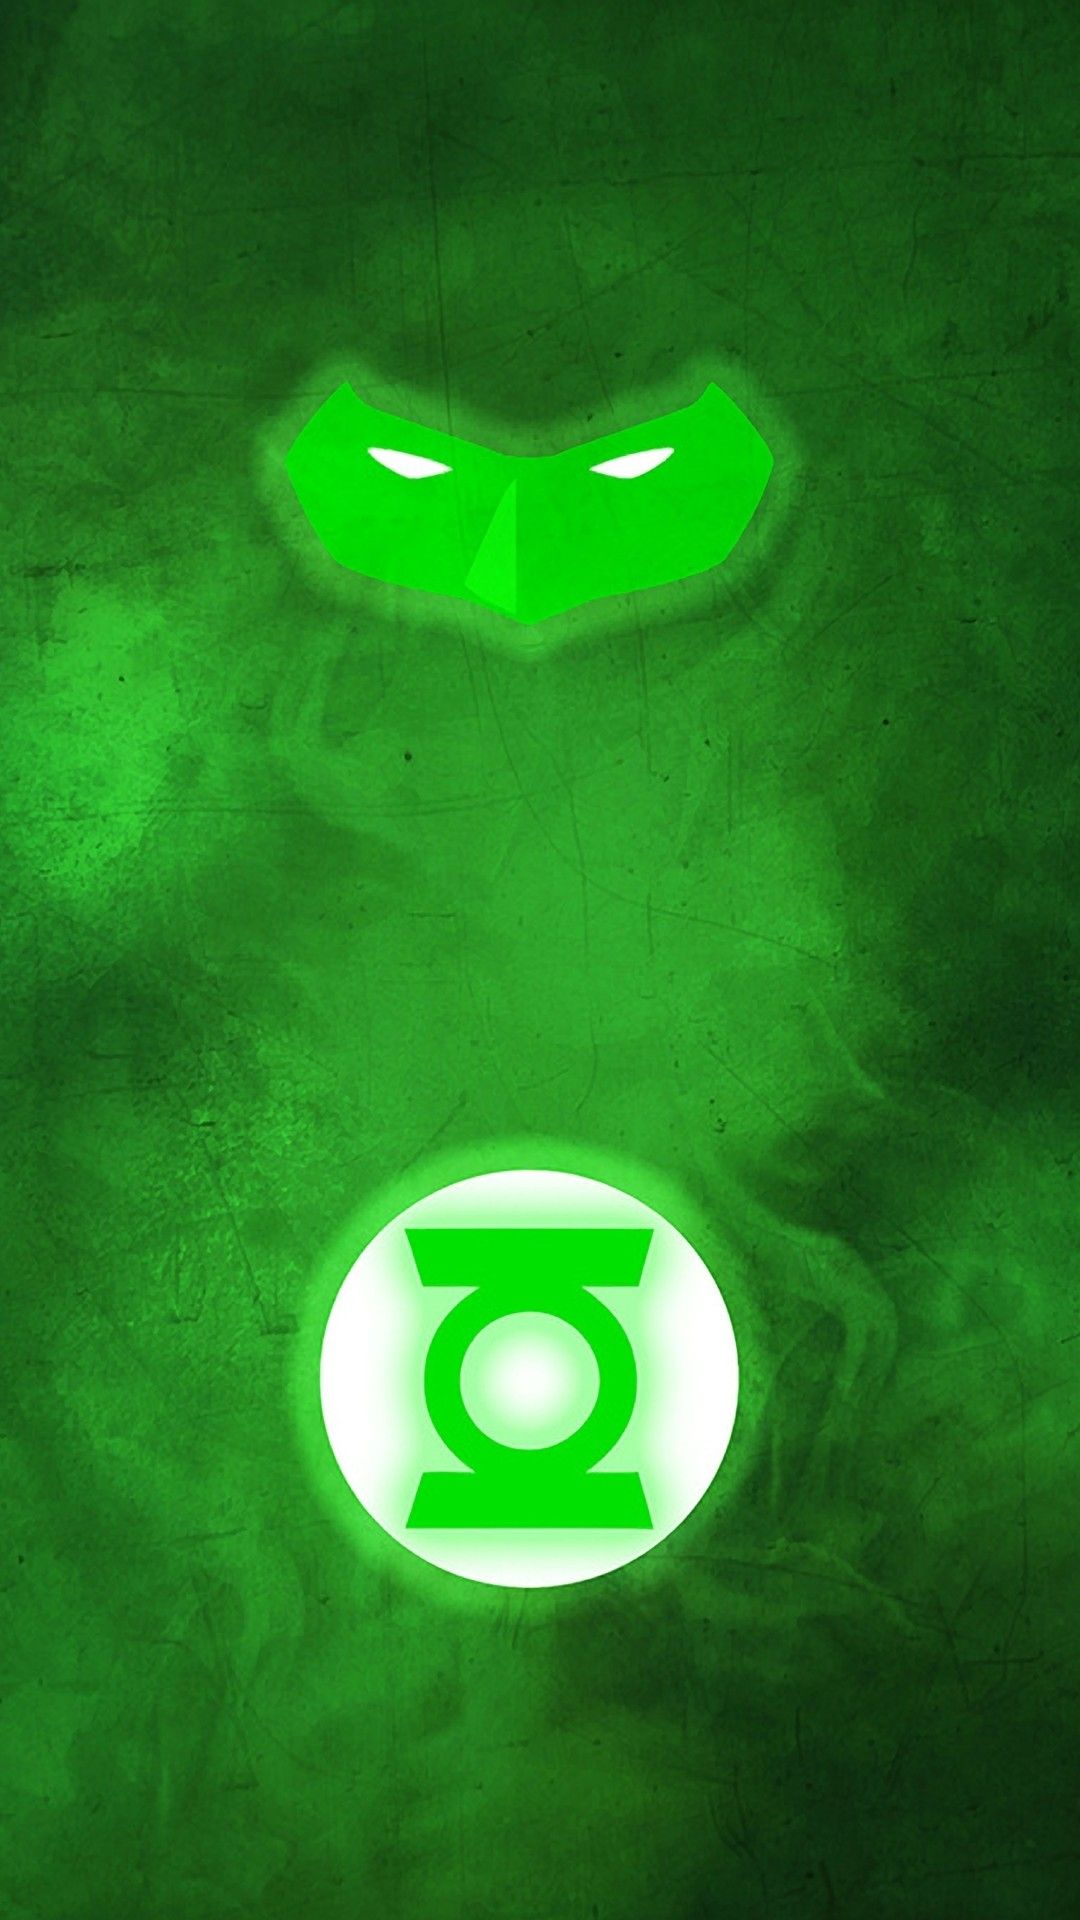 Green Lantern Logo Wallpaper